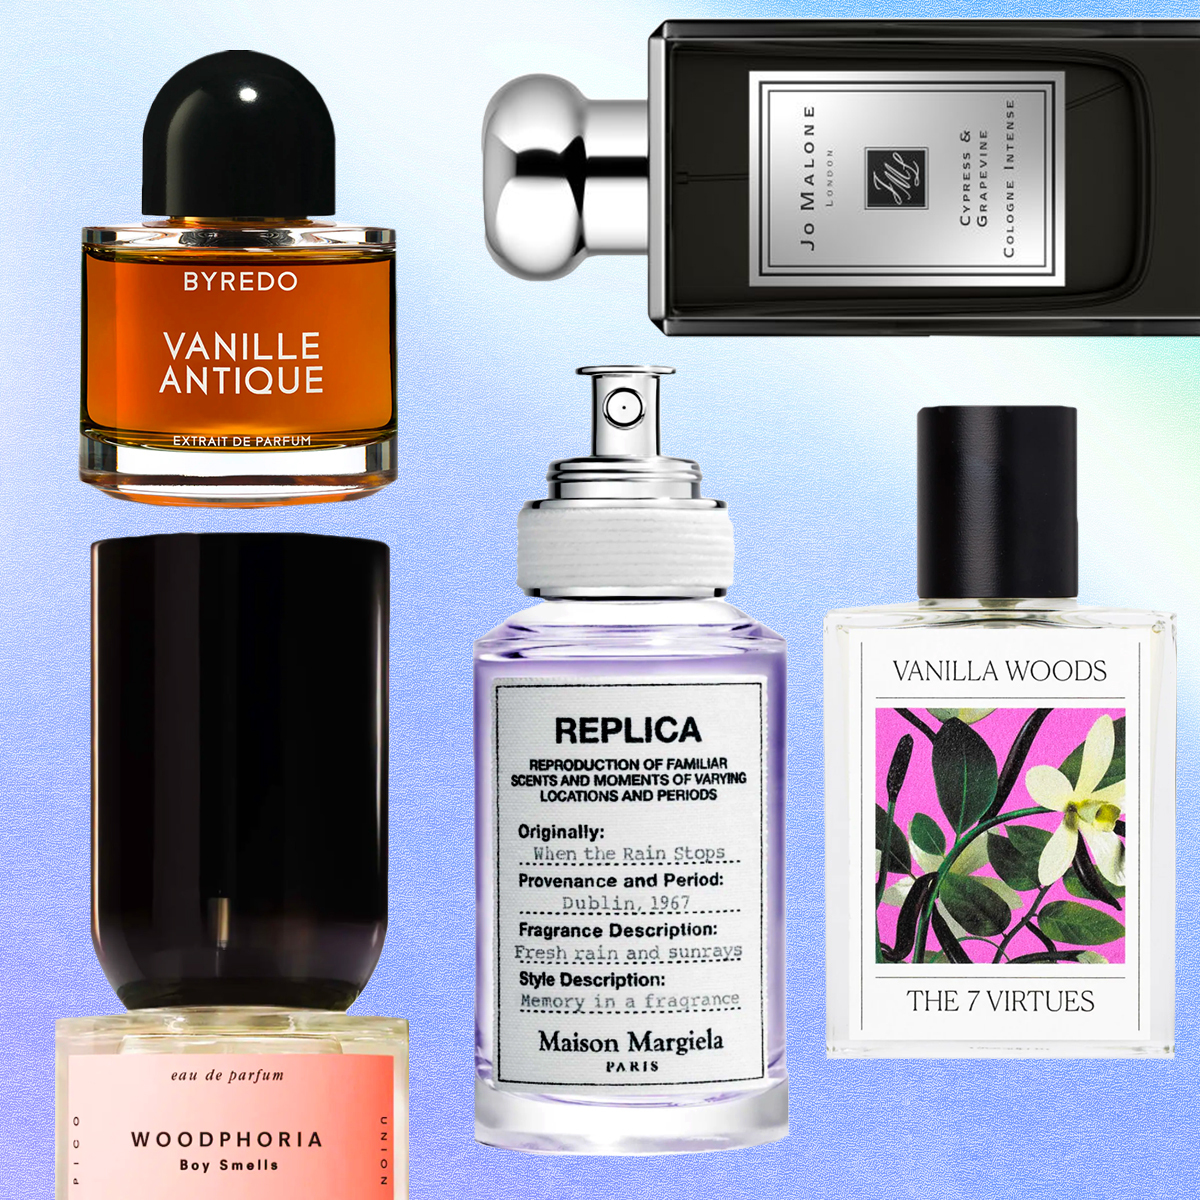 The 12 Best Vanilla Perfumes of 2023